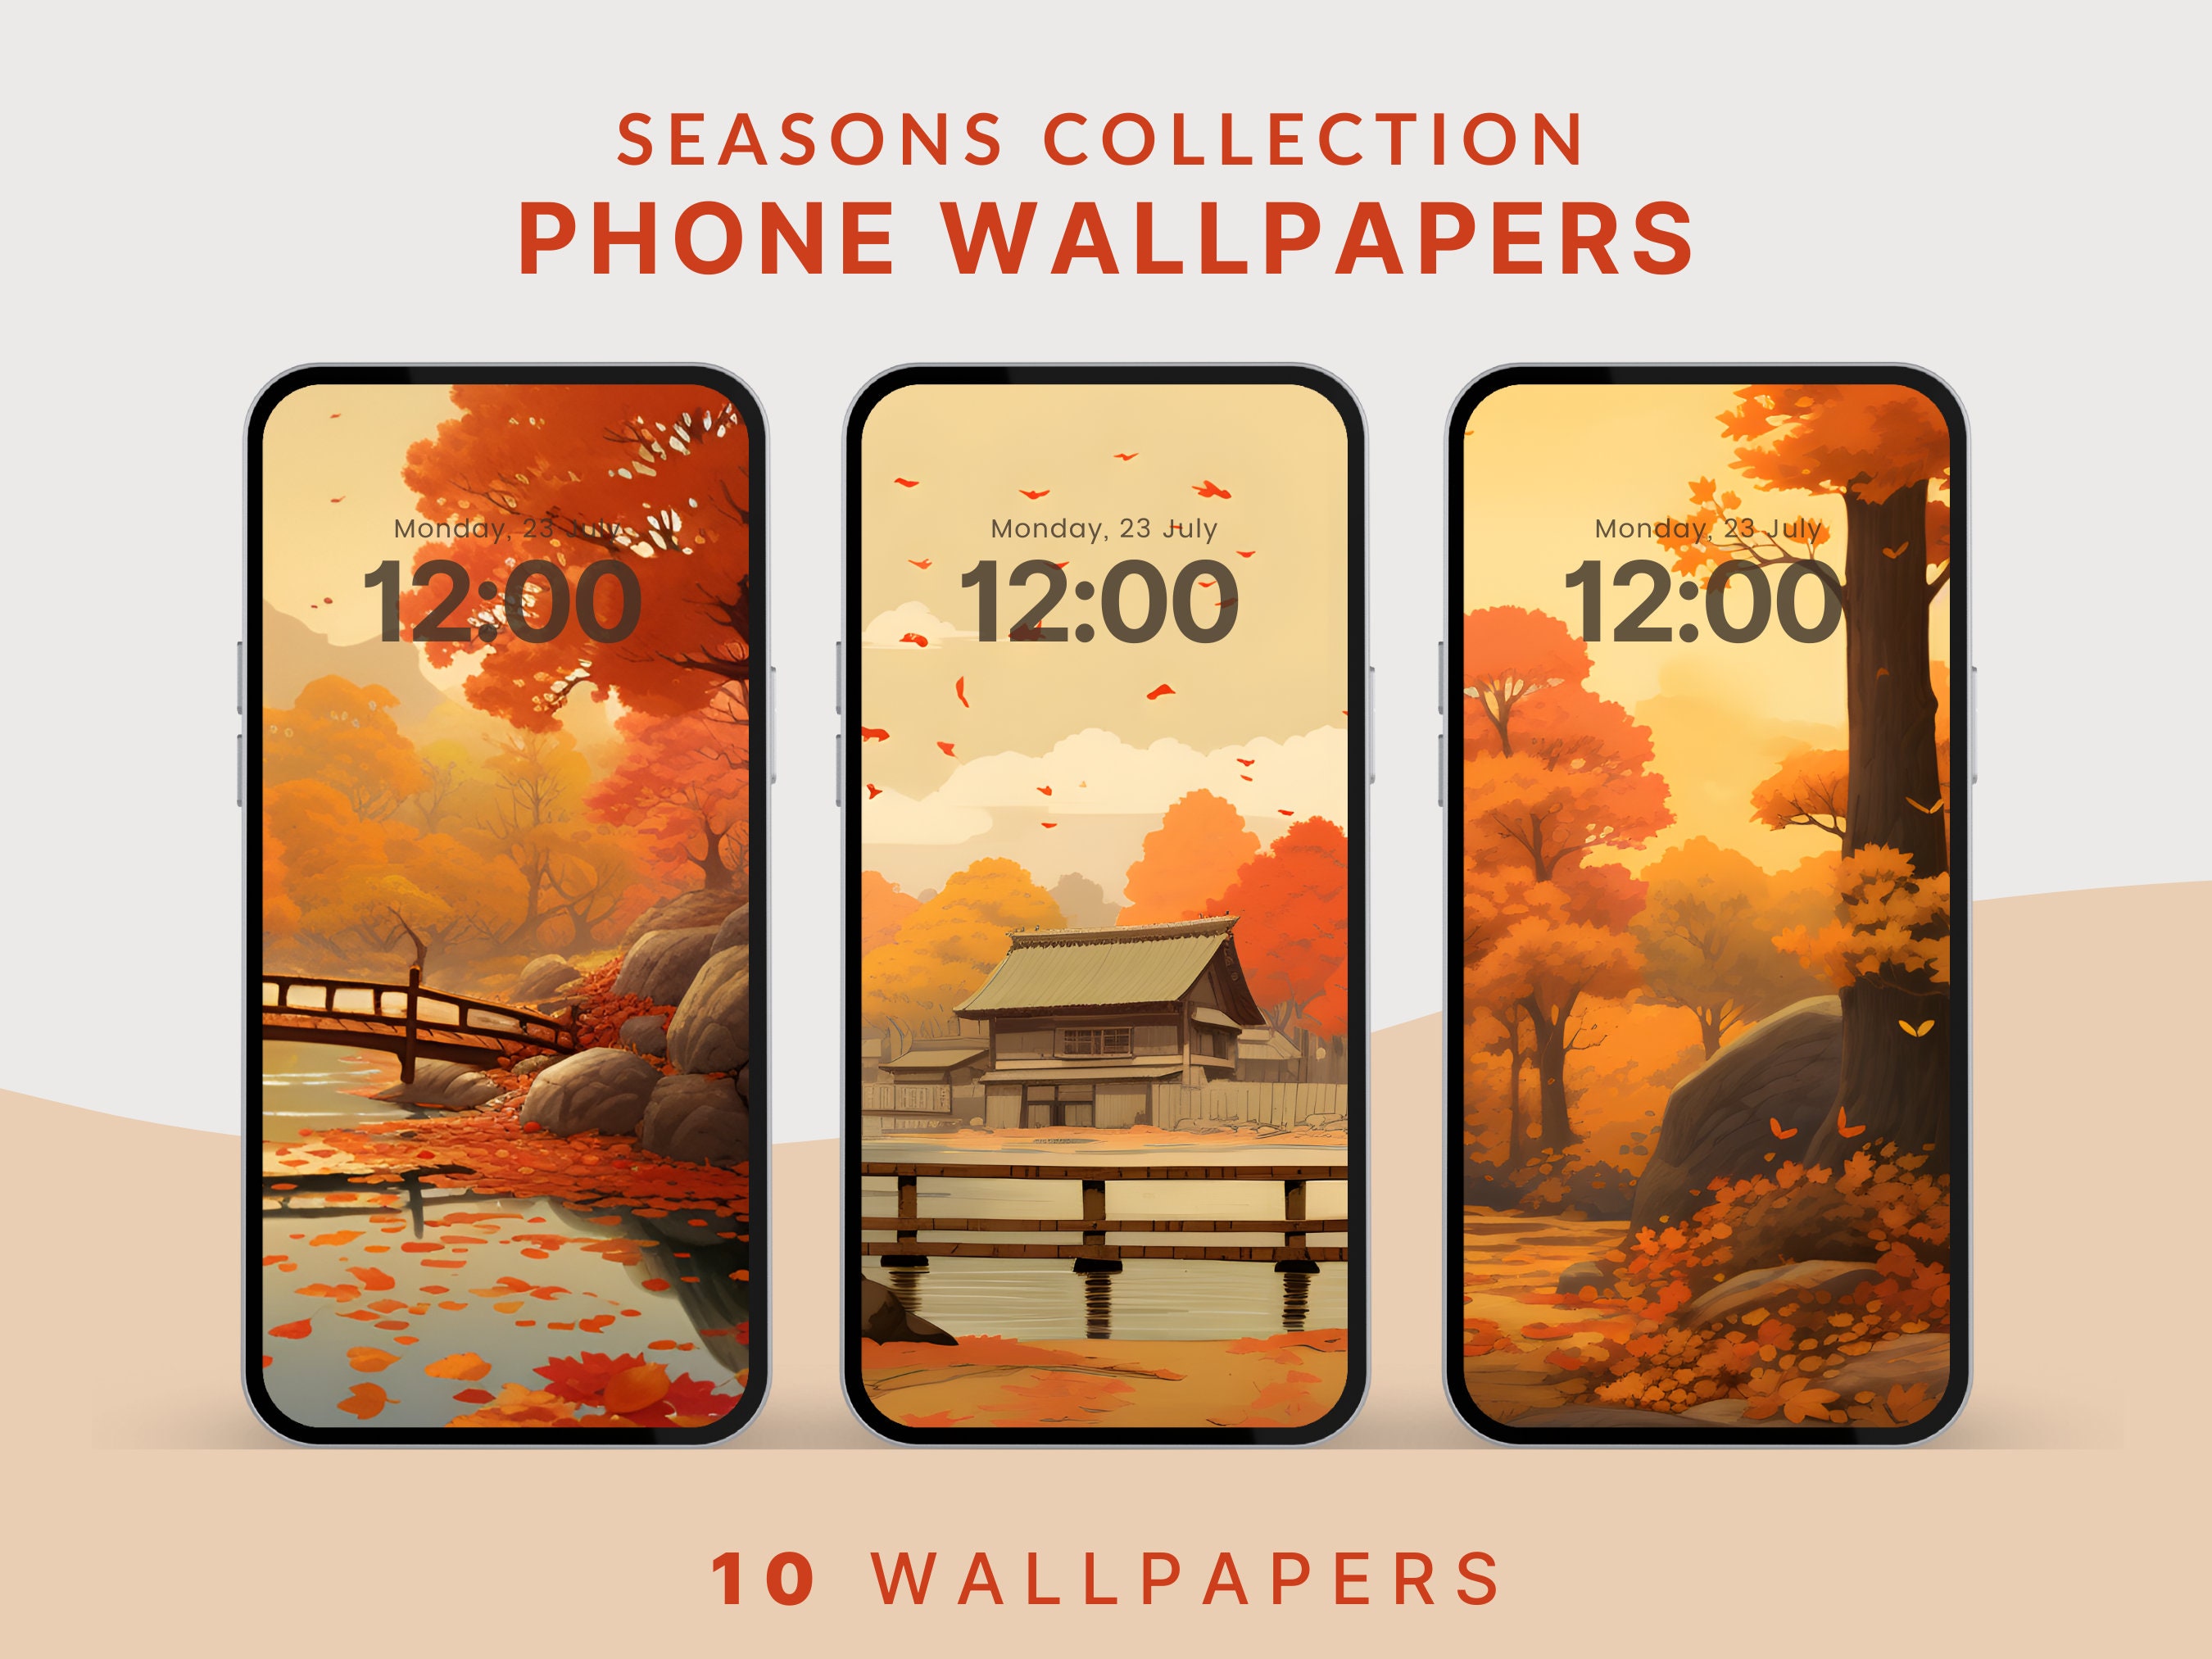 Vampire Anime Girl - iPhone Wallpapers  Anime wallpaper iphone, Girl  iphone wallpaper, Iphone wallpaper